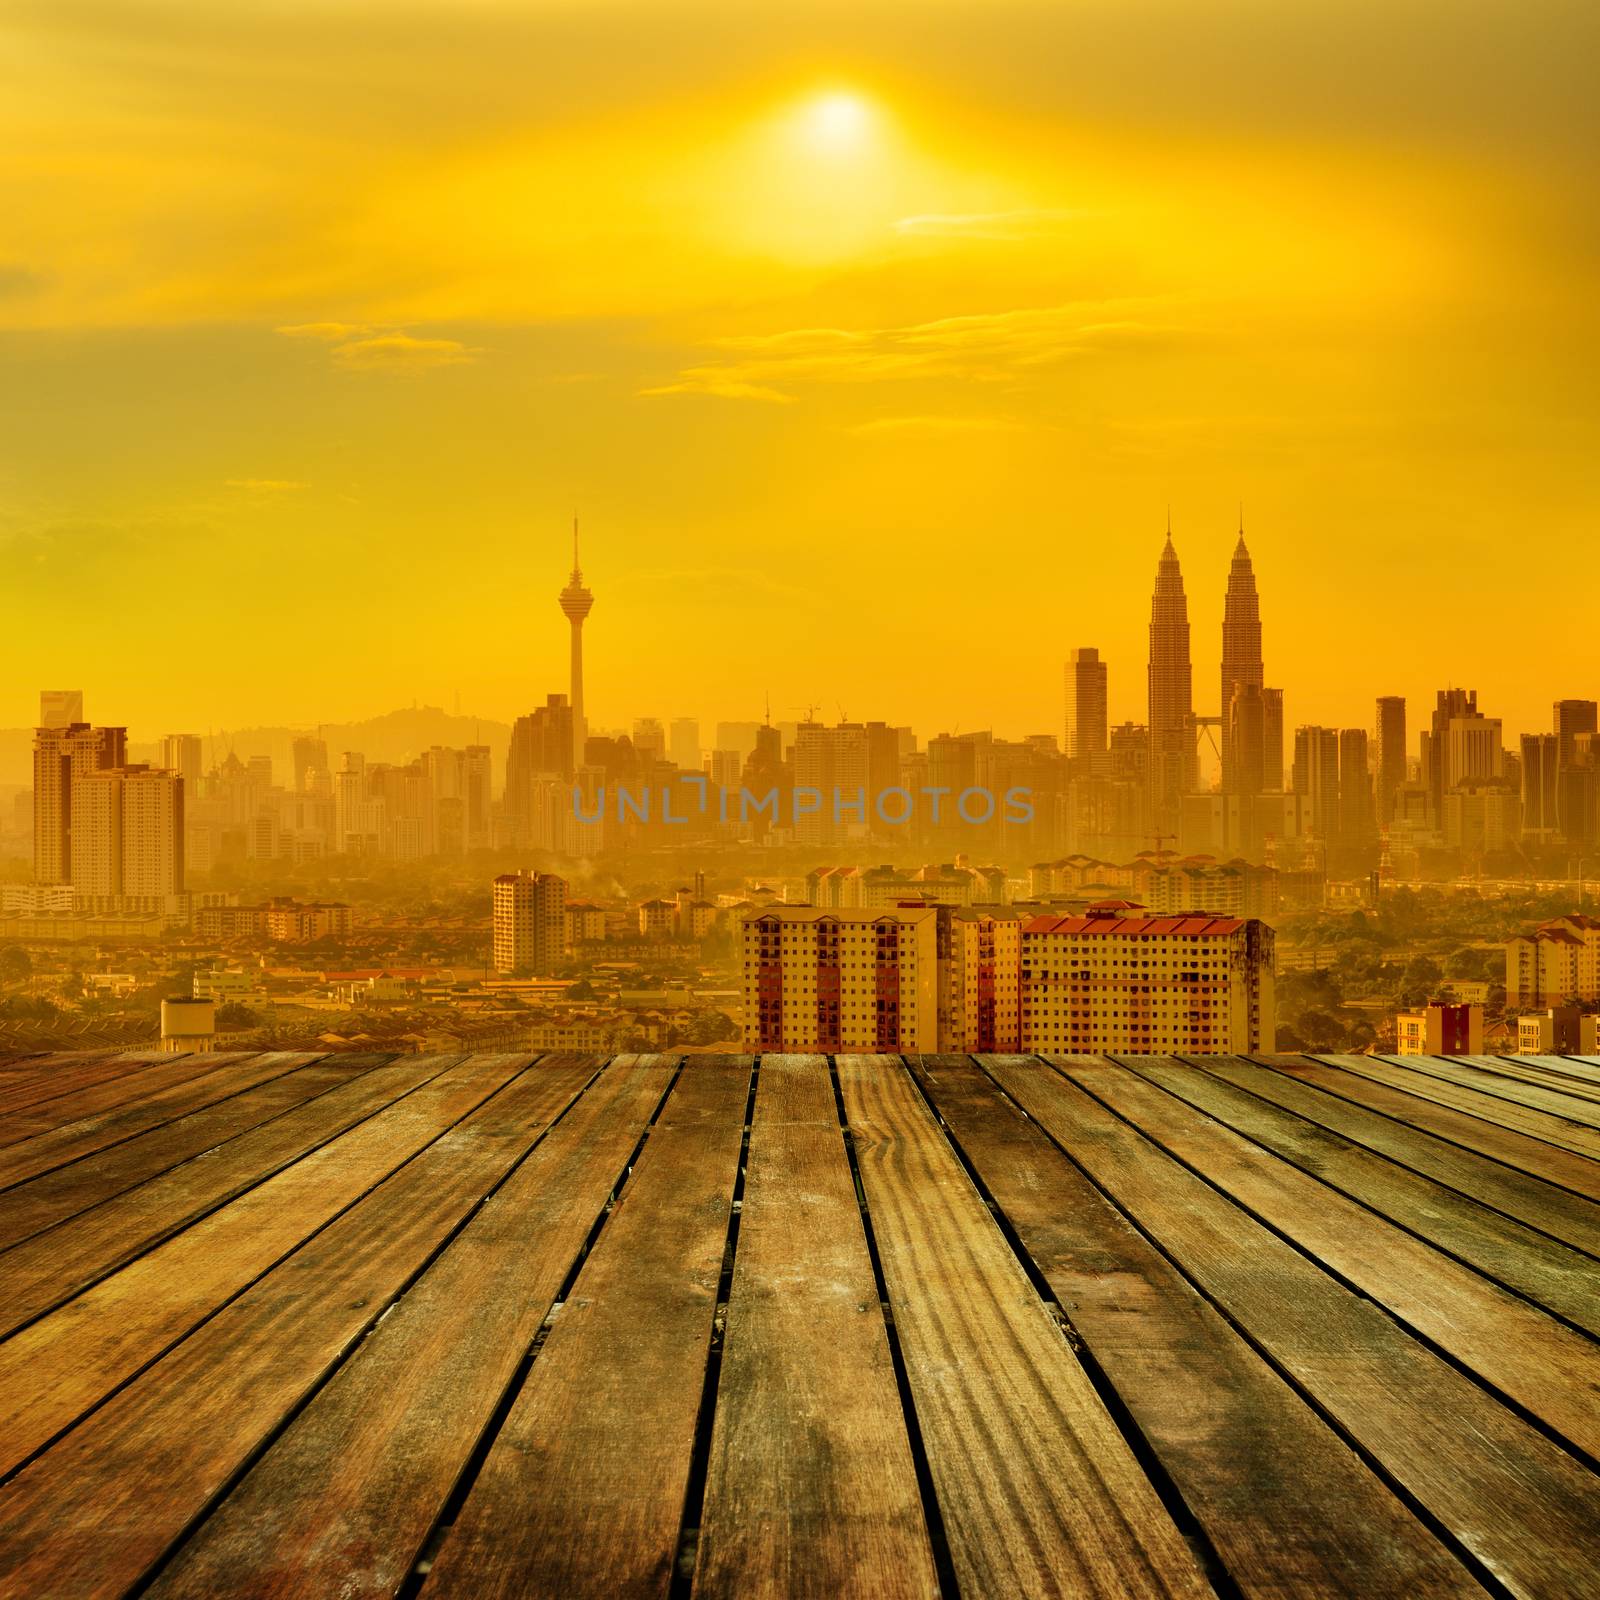 Kuala Lumpur city skyline view from wooden platform.